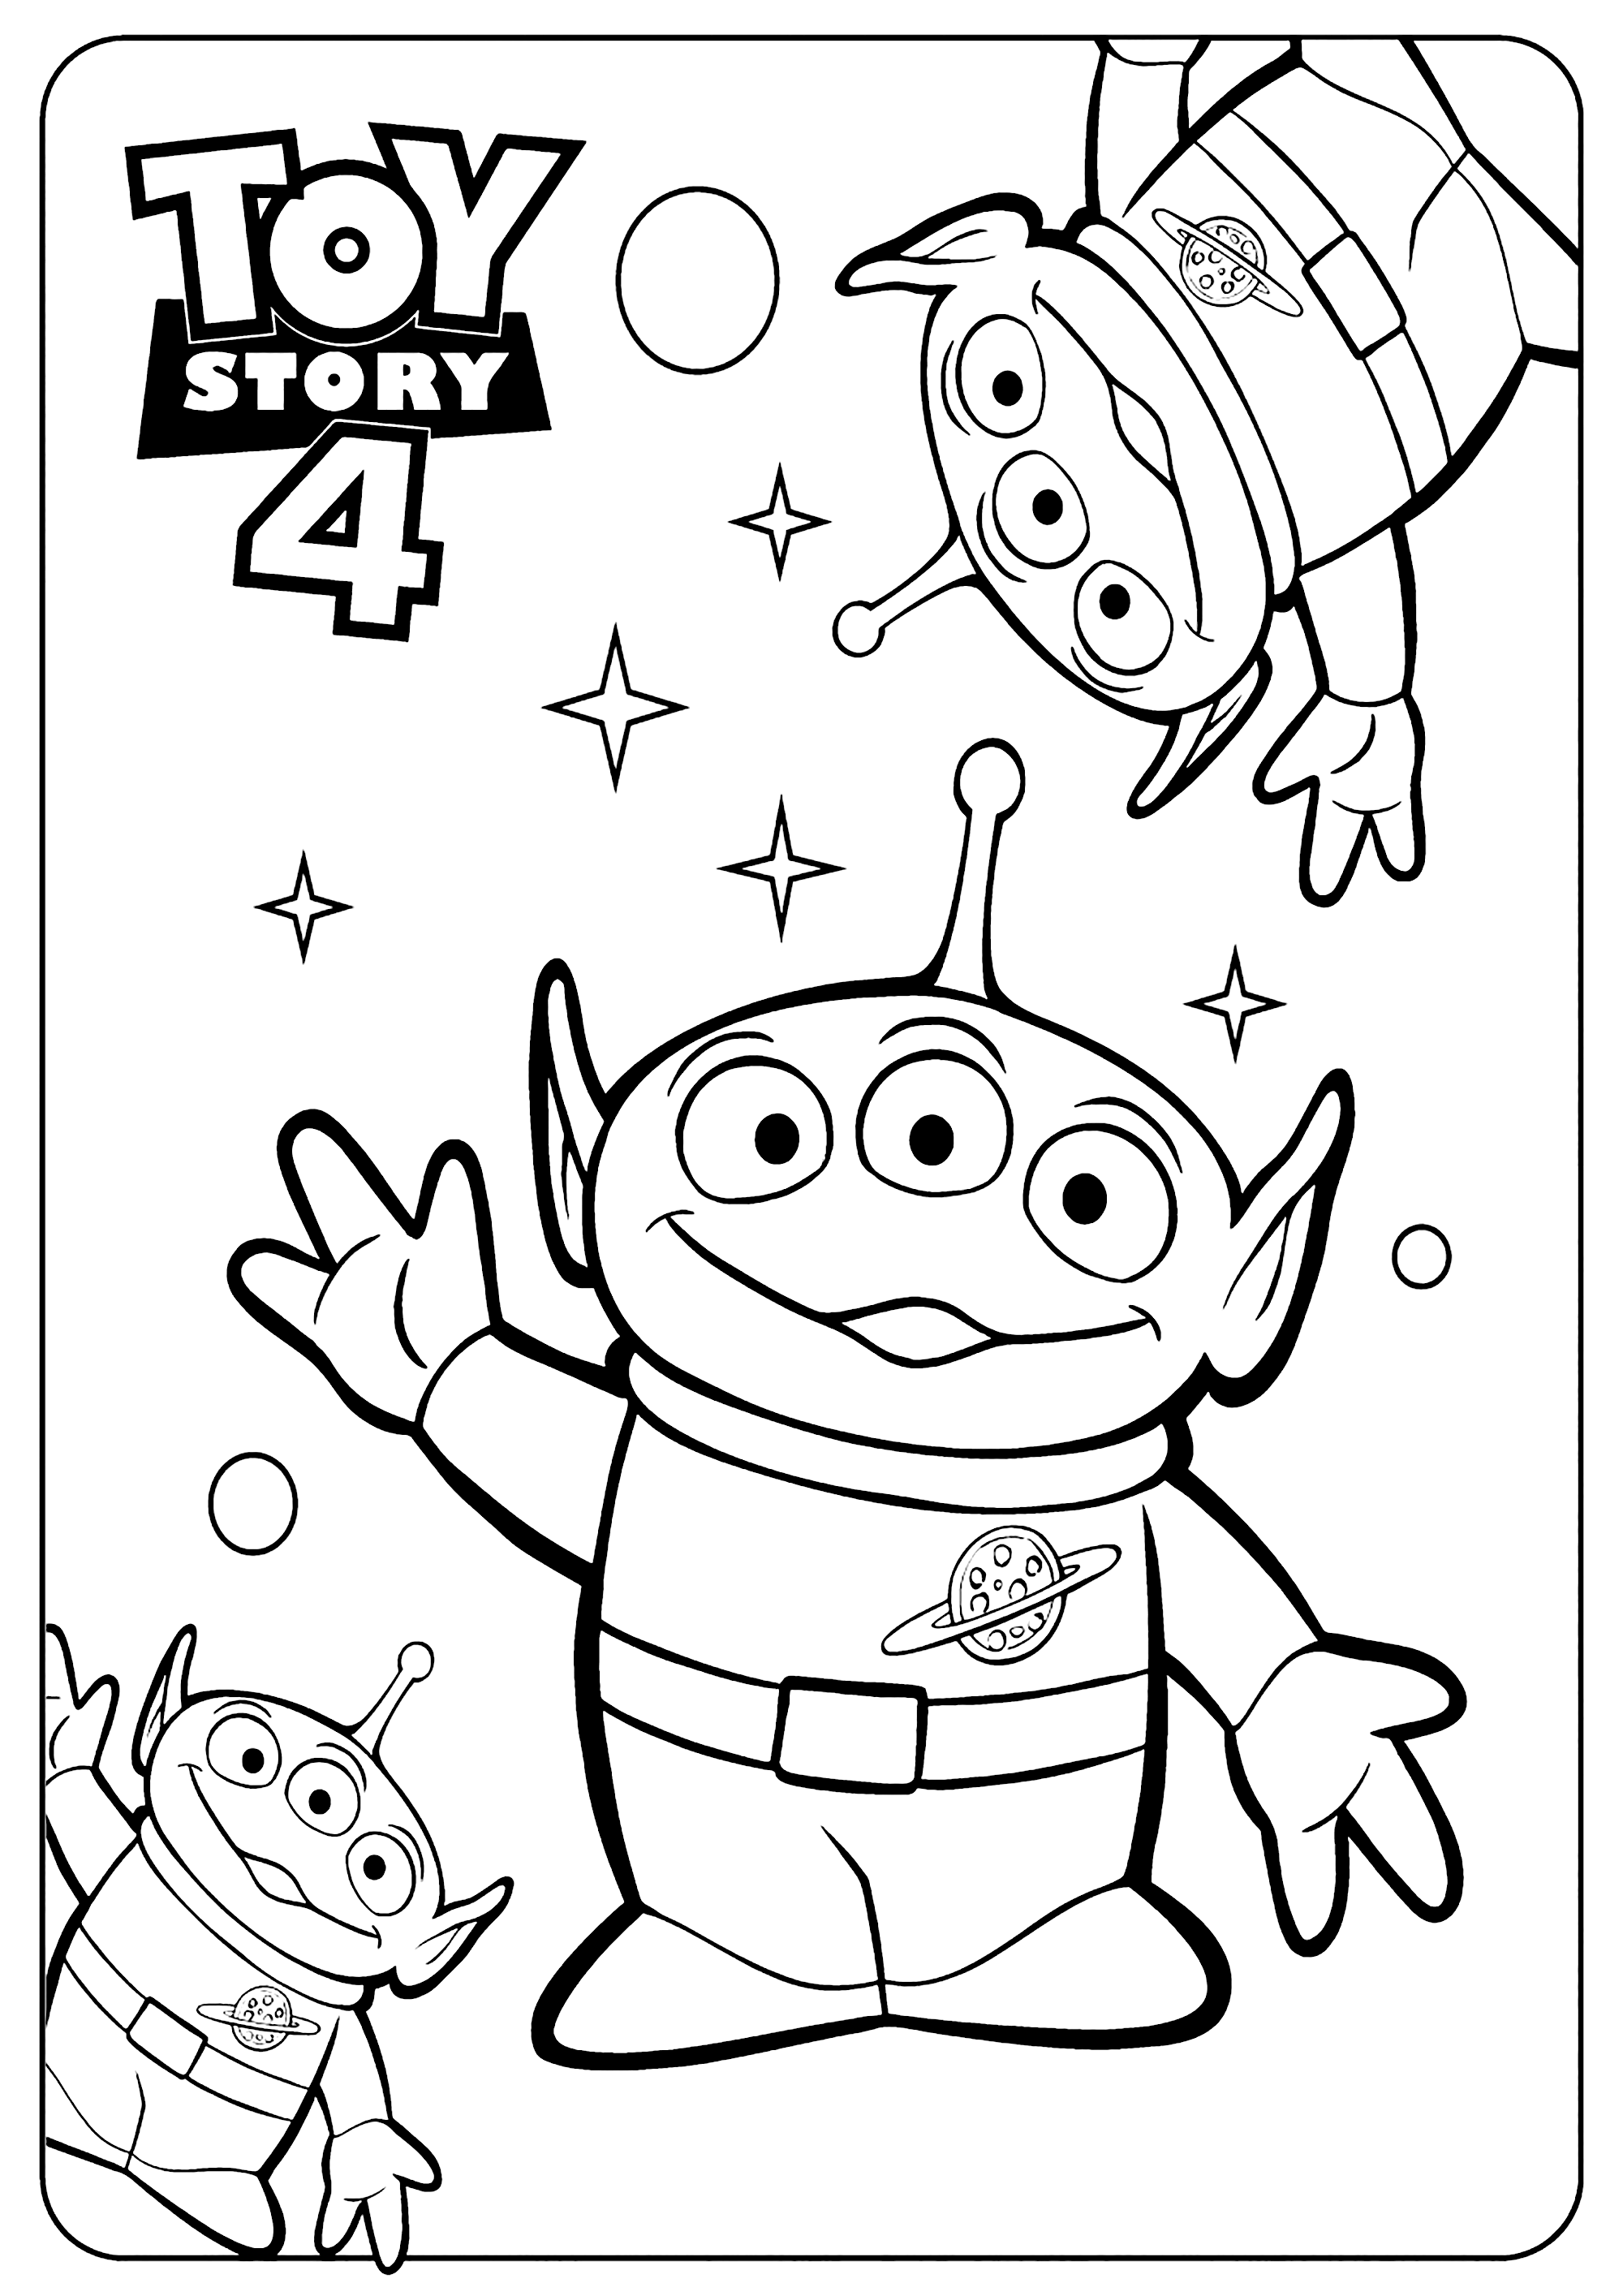 Bo peep toy story coloring page disney pixar